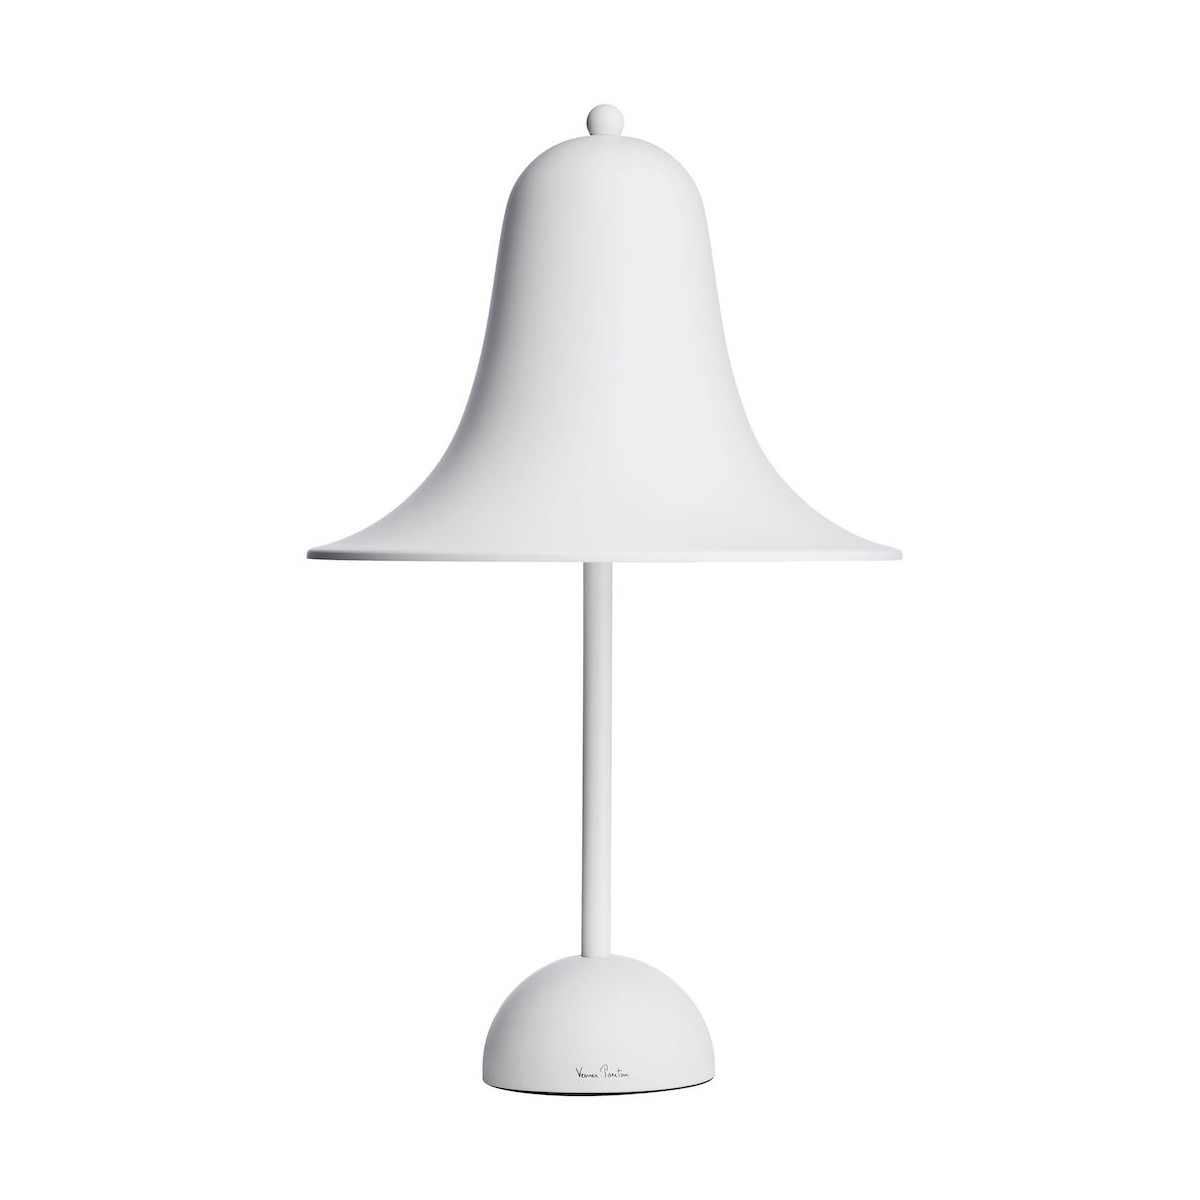 matt white - Pantop table lamp*